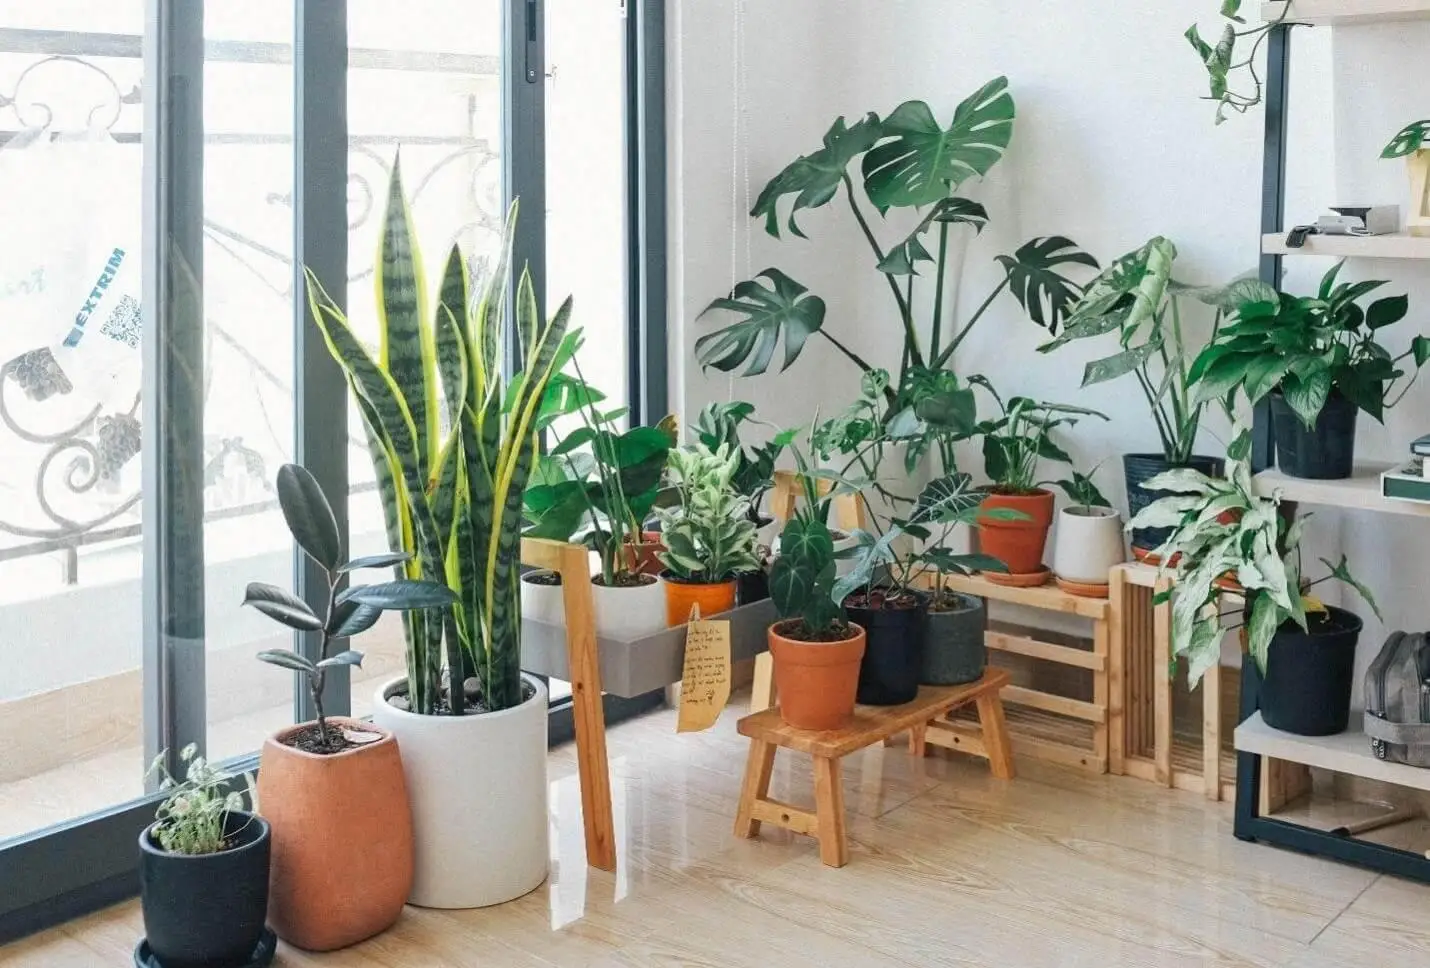 arrange your plants in clusters